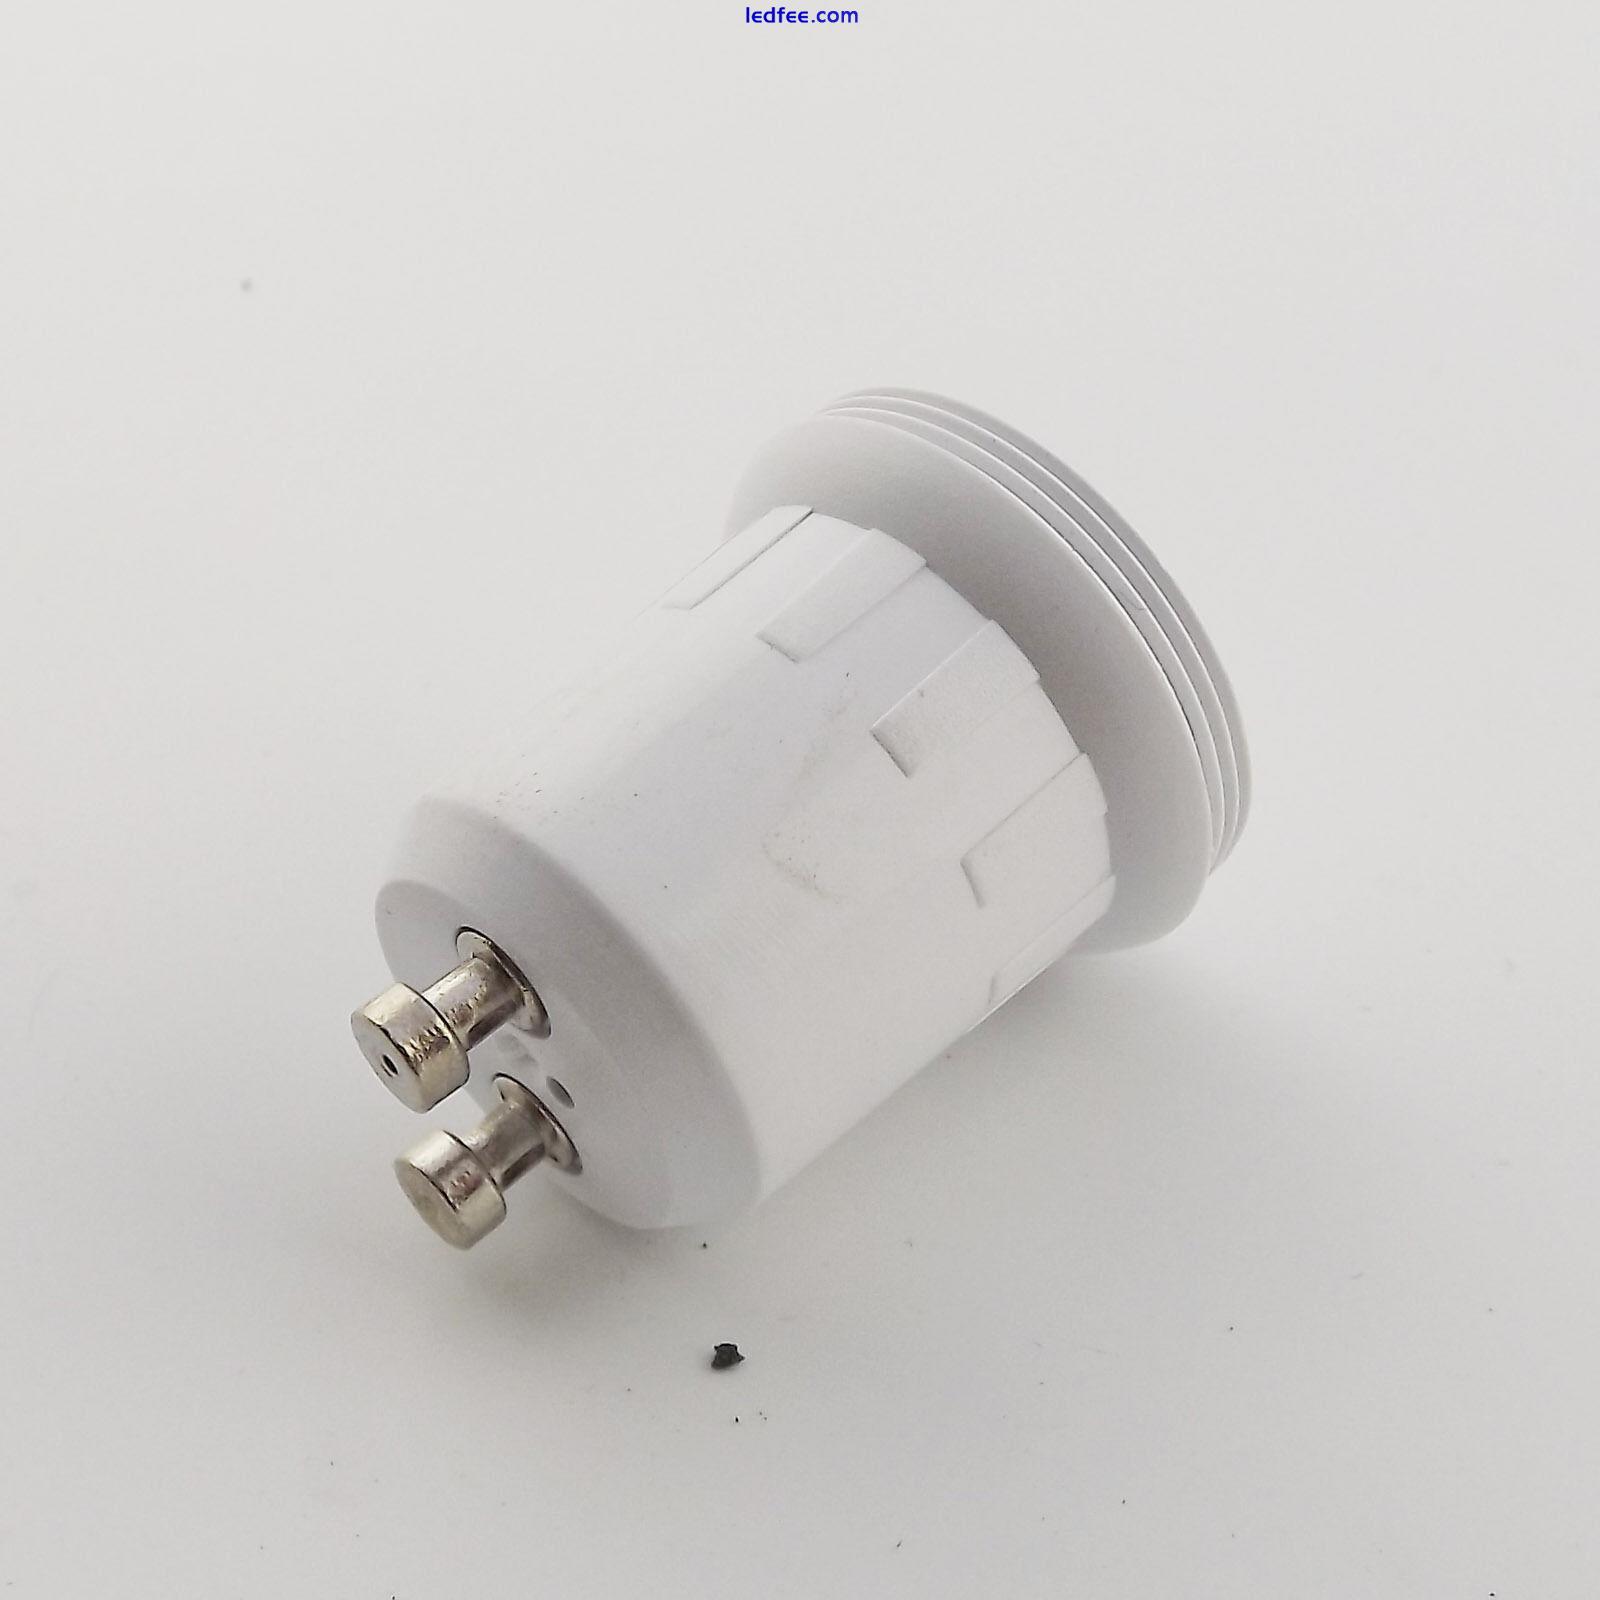 10pcs GU10 to E12 LED Lamp Halogen CFL Light Bulb Base Adapter Converter Holder 1 